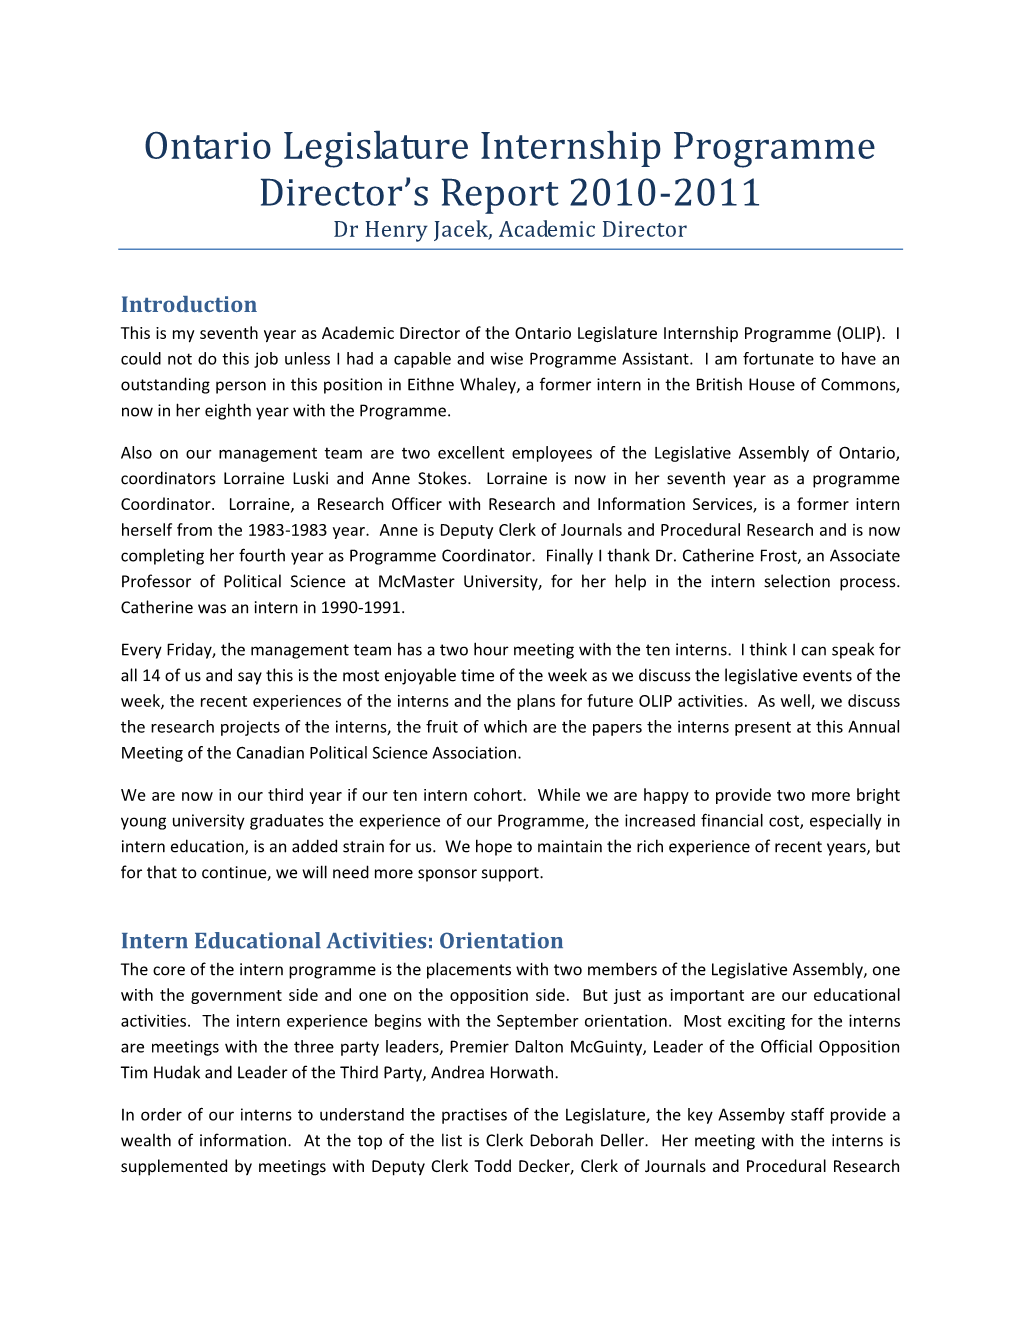 Ontario Legislature Internship Programme Directorss Report 2010-2011